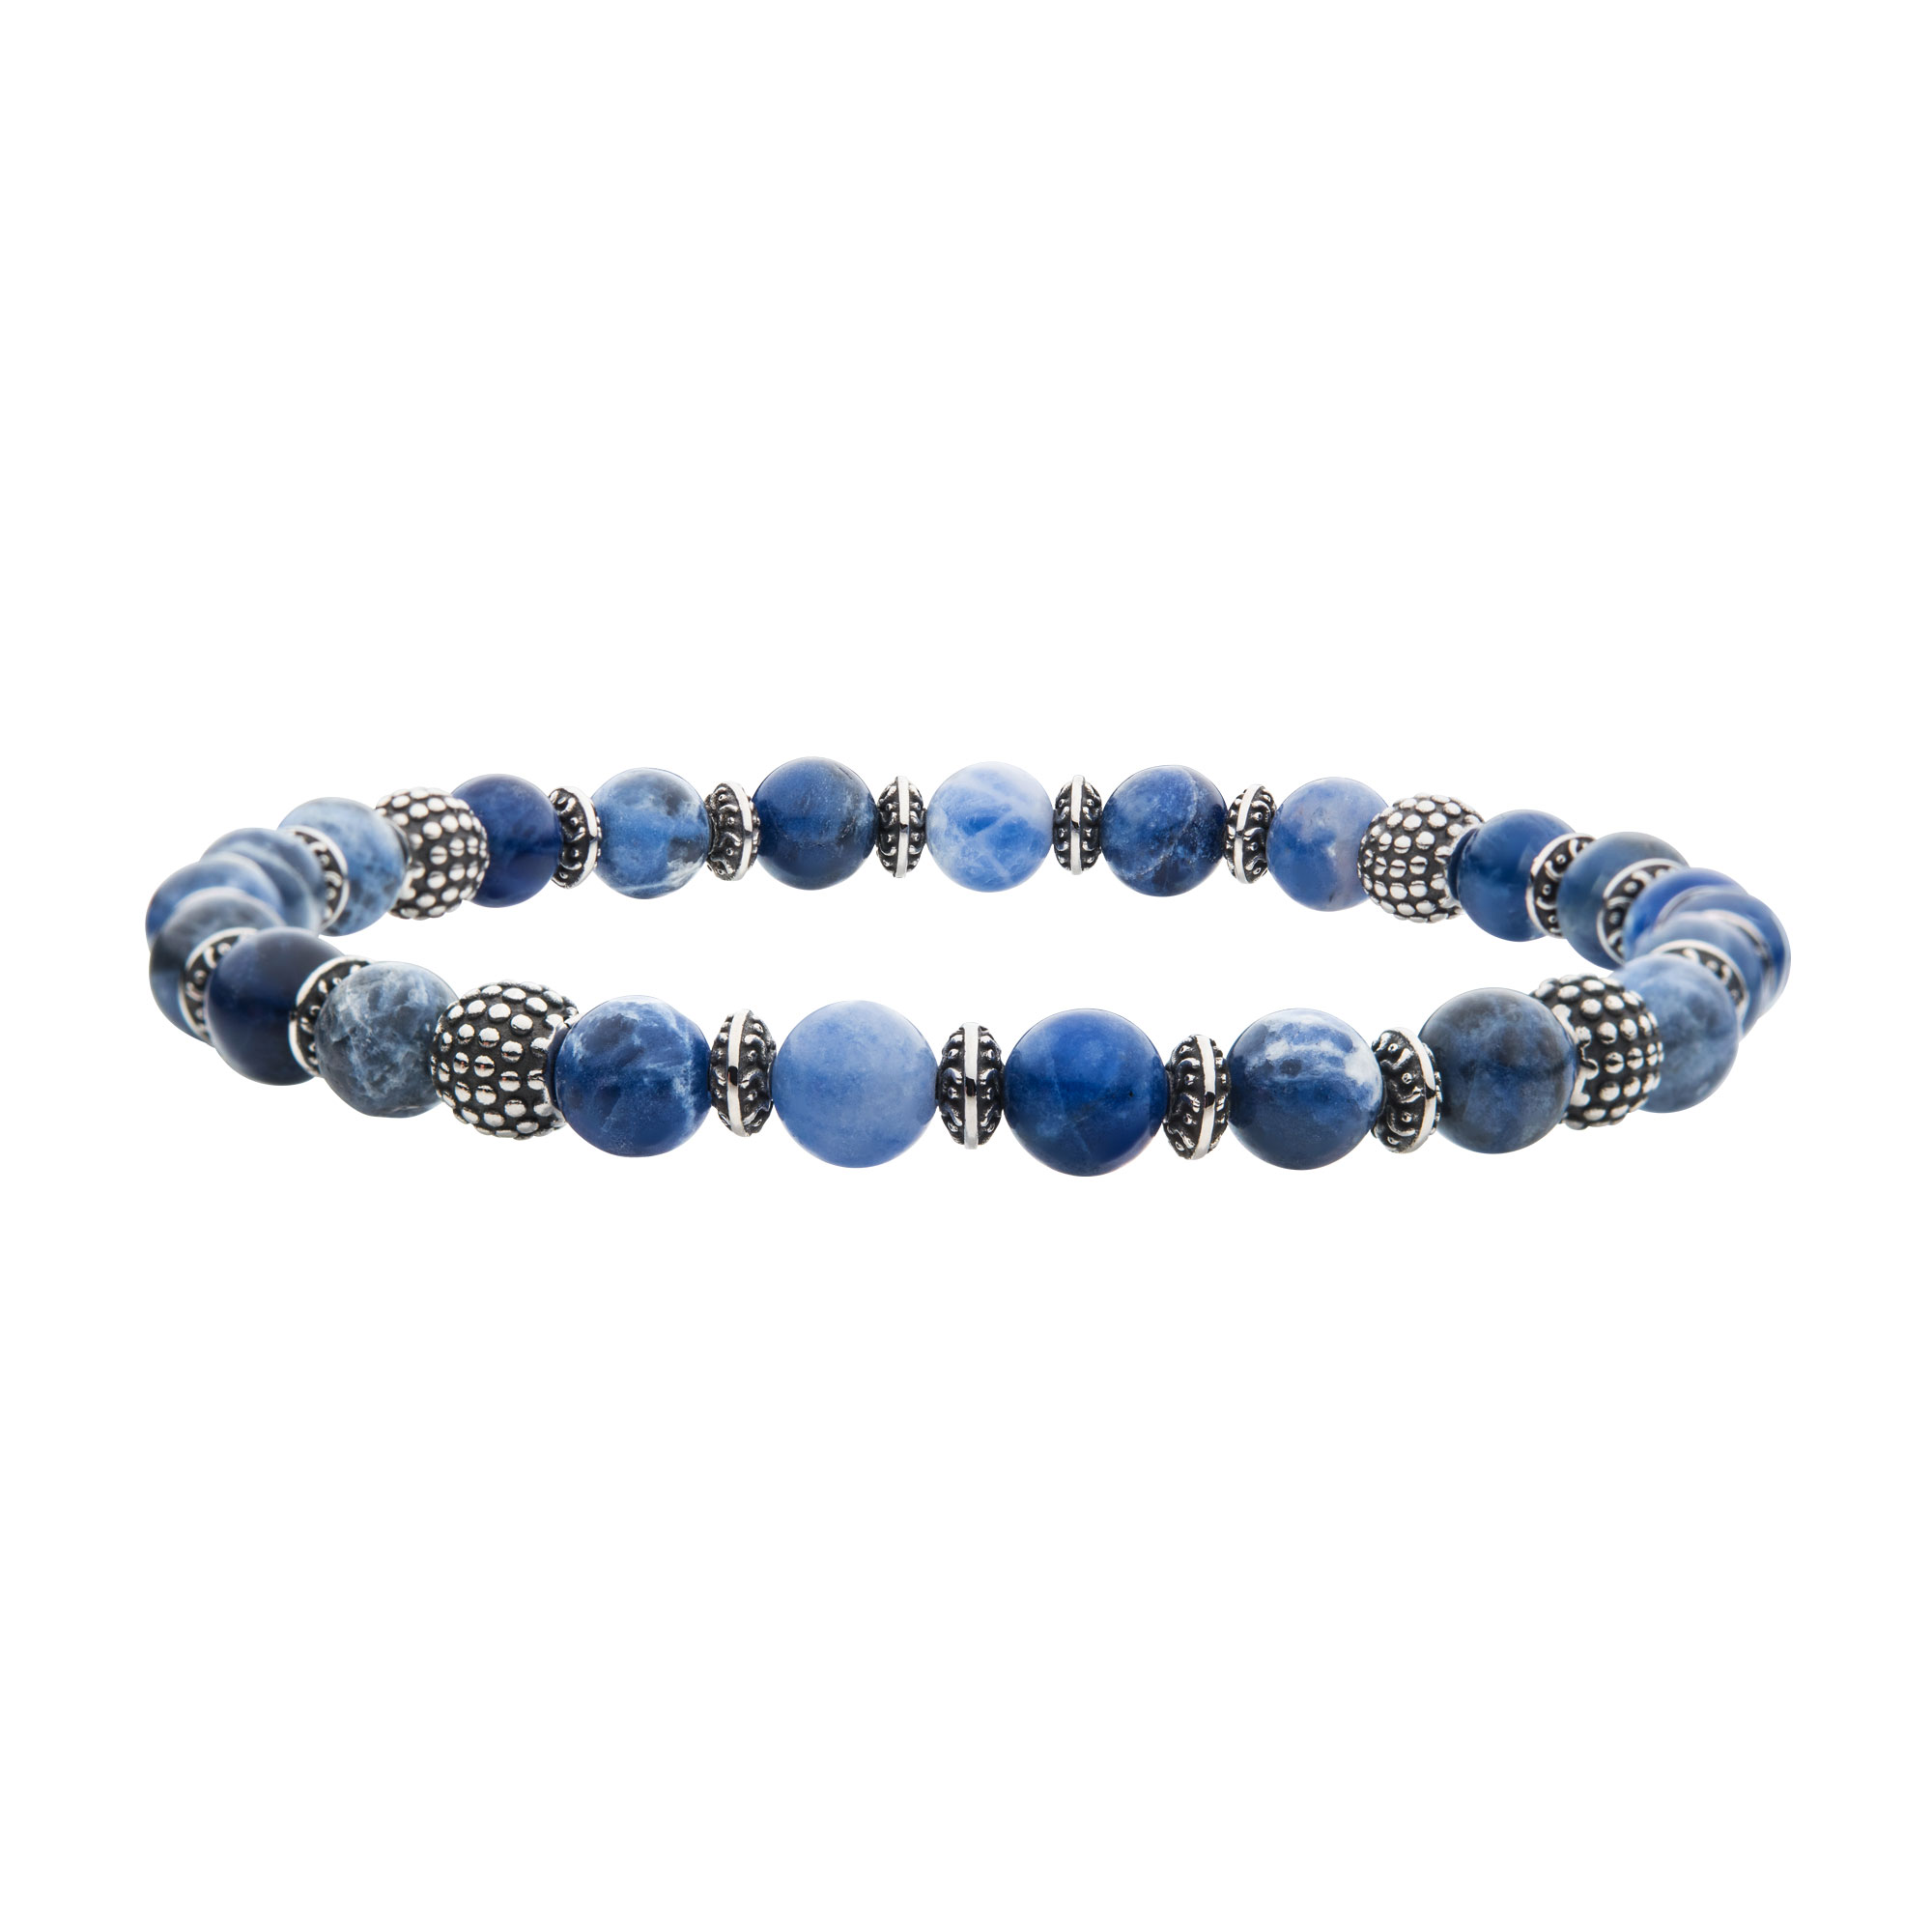 Blue Sodalite Stones with Black Oxidized Beads Bracelet Carroll / Ochs Jewelers Monroe, MI